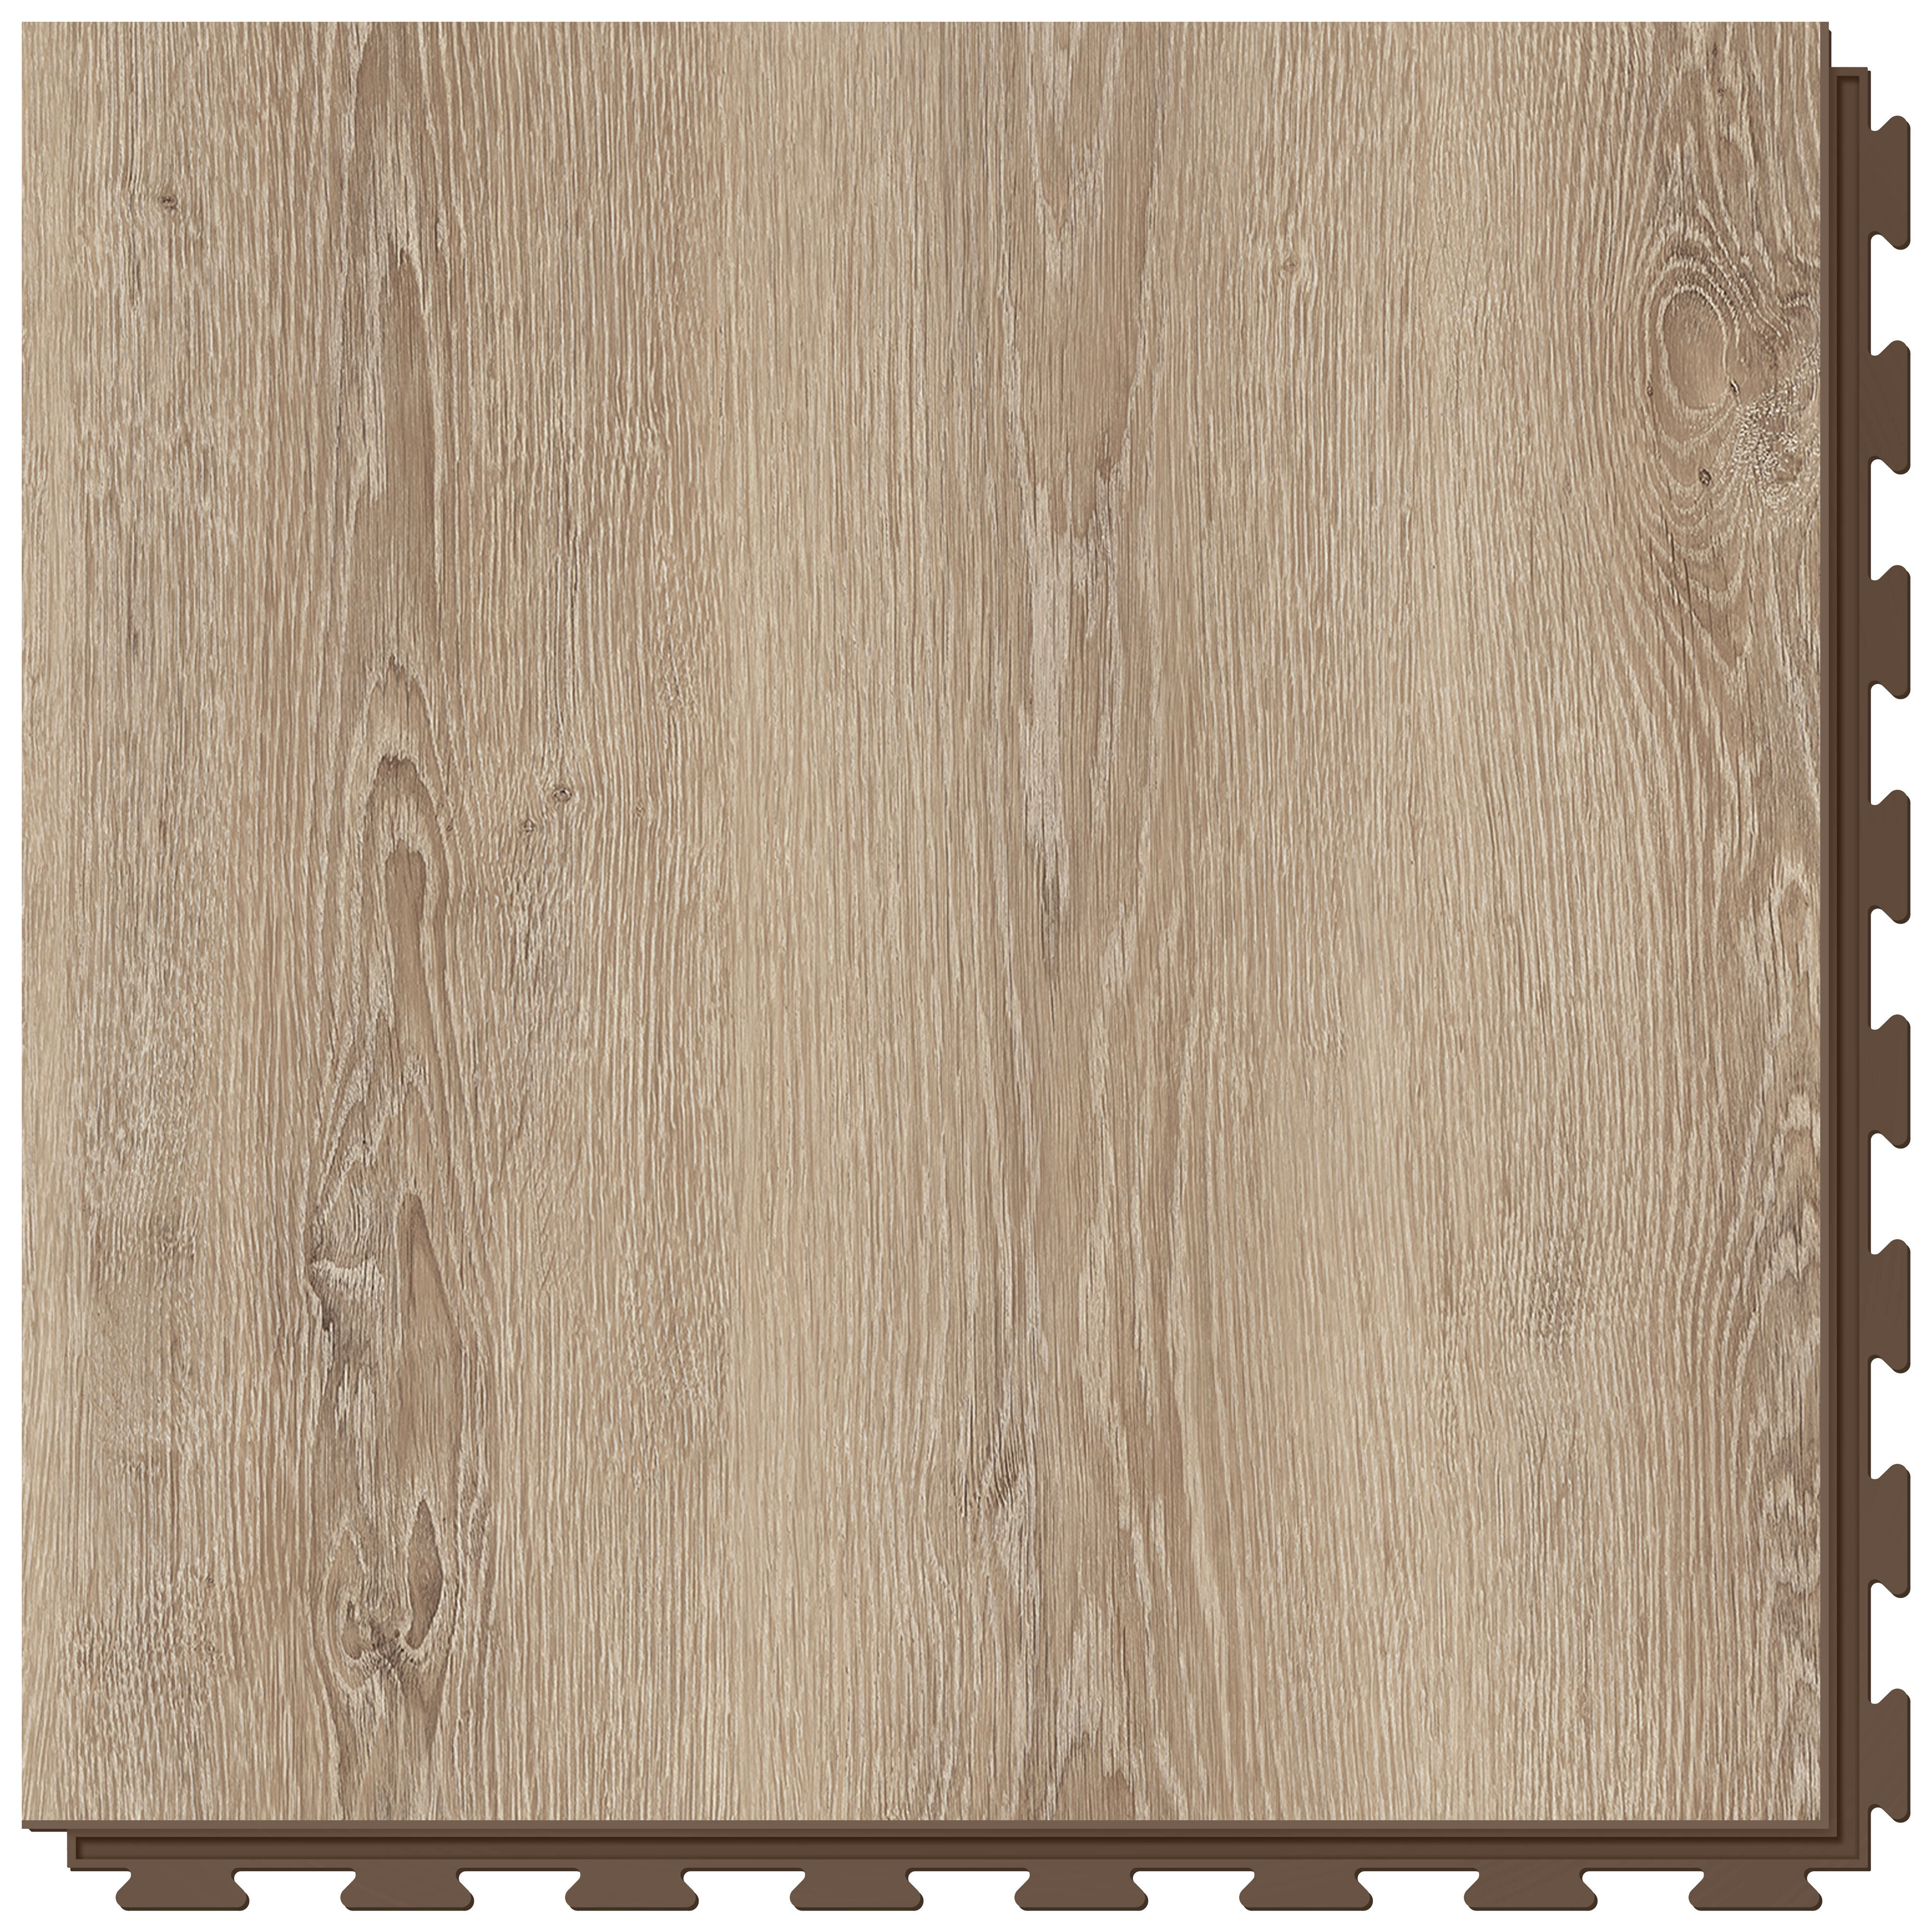 Hnědá vinylová PVC dlaždice Fortelock Business Brown Tyrolean oak W001 - délka 66,8 cm, šířka 66,8 cm, výška 0,7 cm